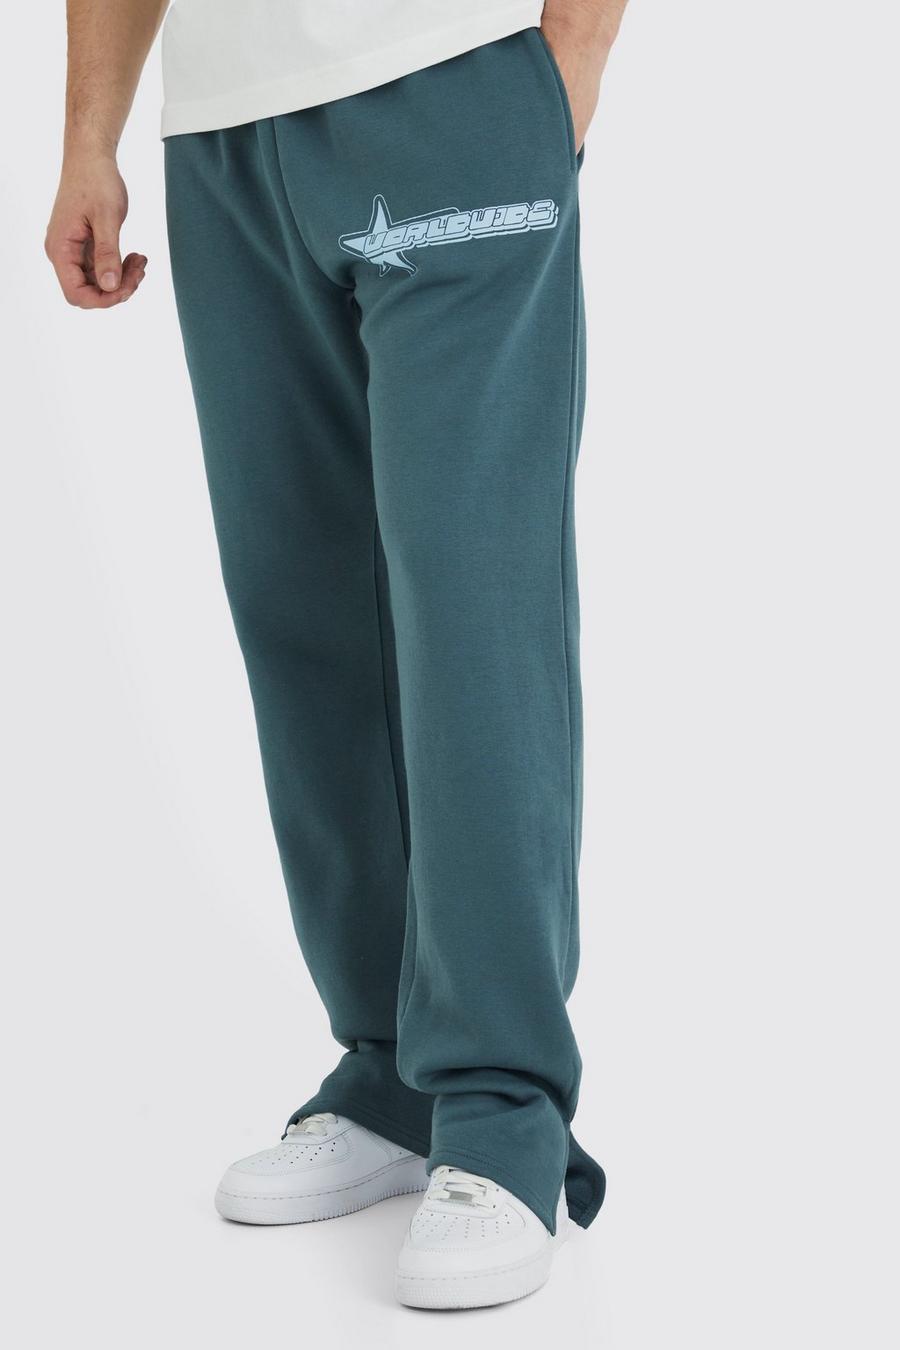 Pantaloni tuta Tall Regular Fit Worldwide con stelle e spacco sul fondo, Slate blue image number 1